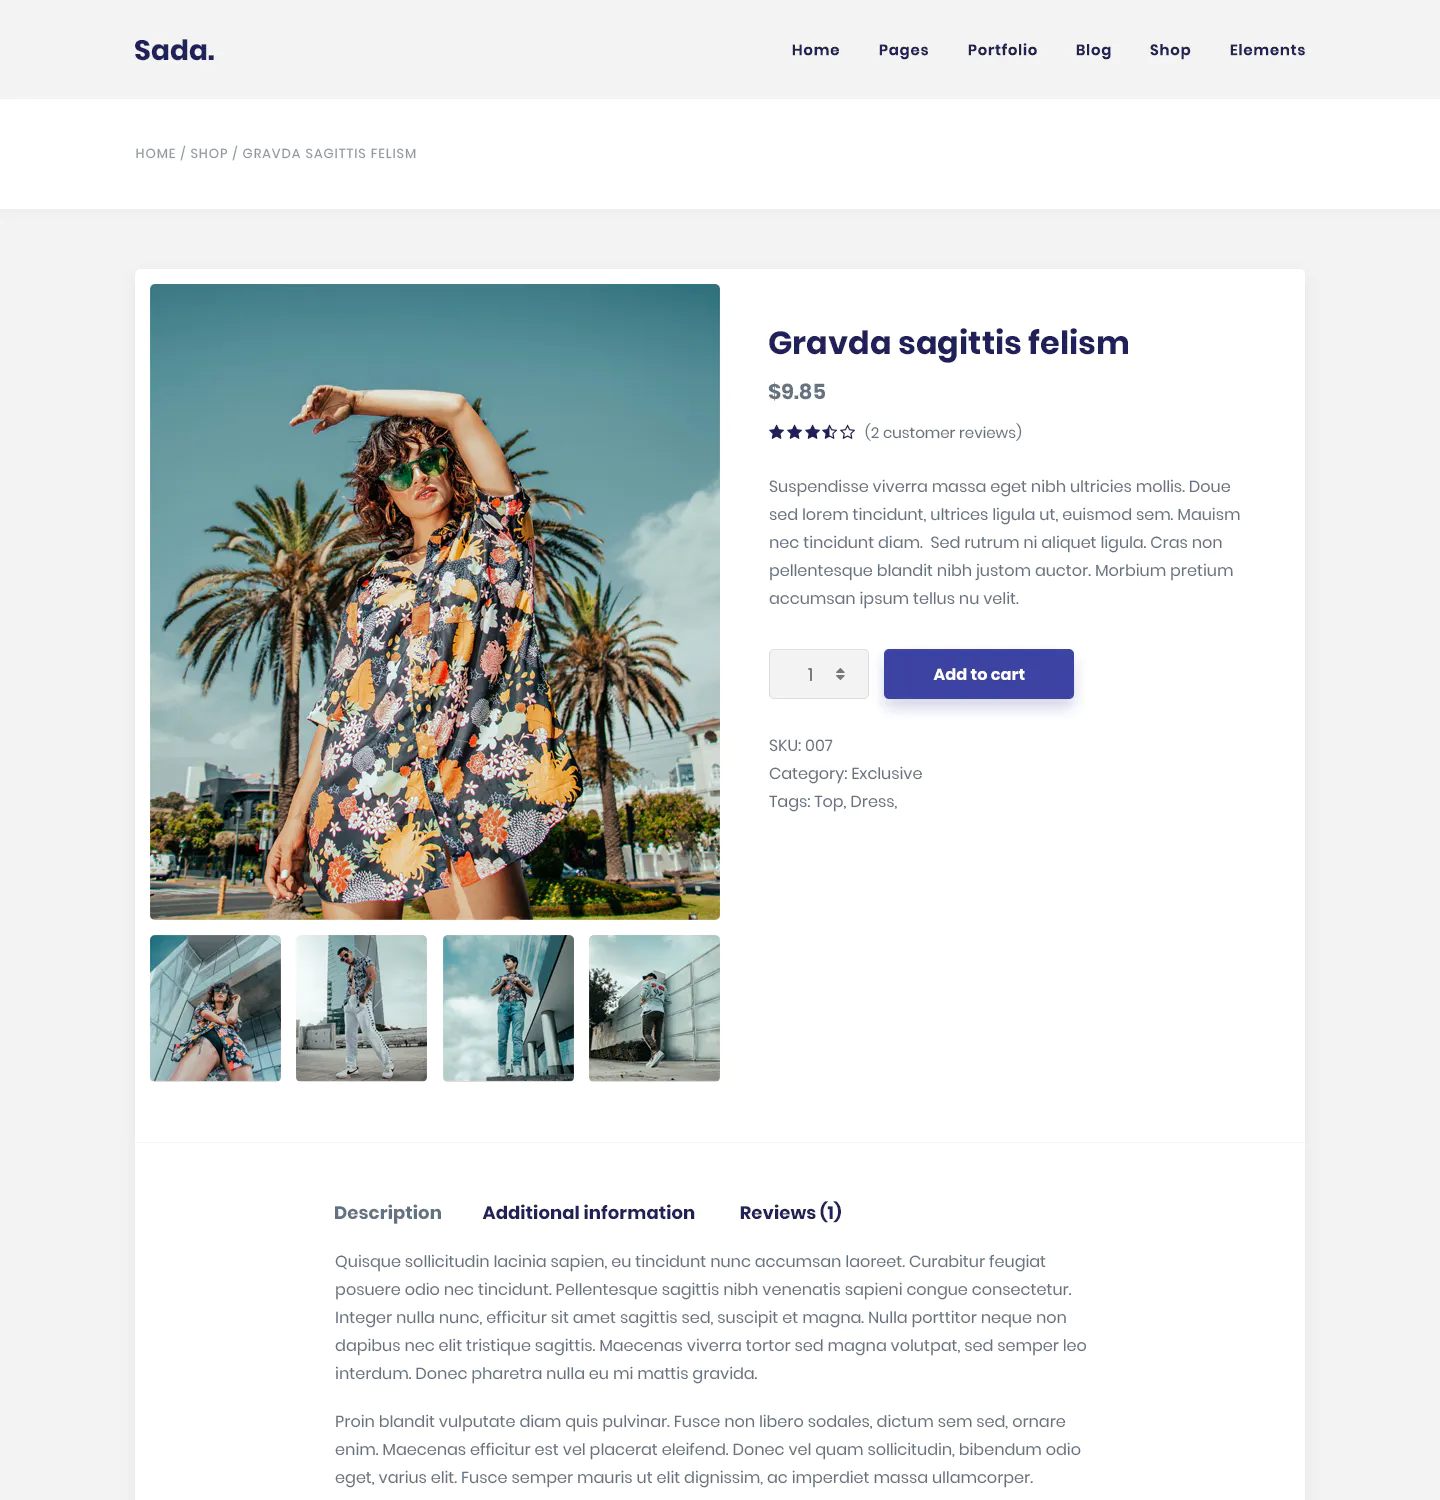 Sada - A WordPress Theme For Blog & Shop